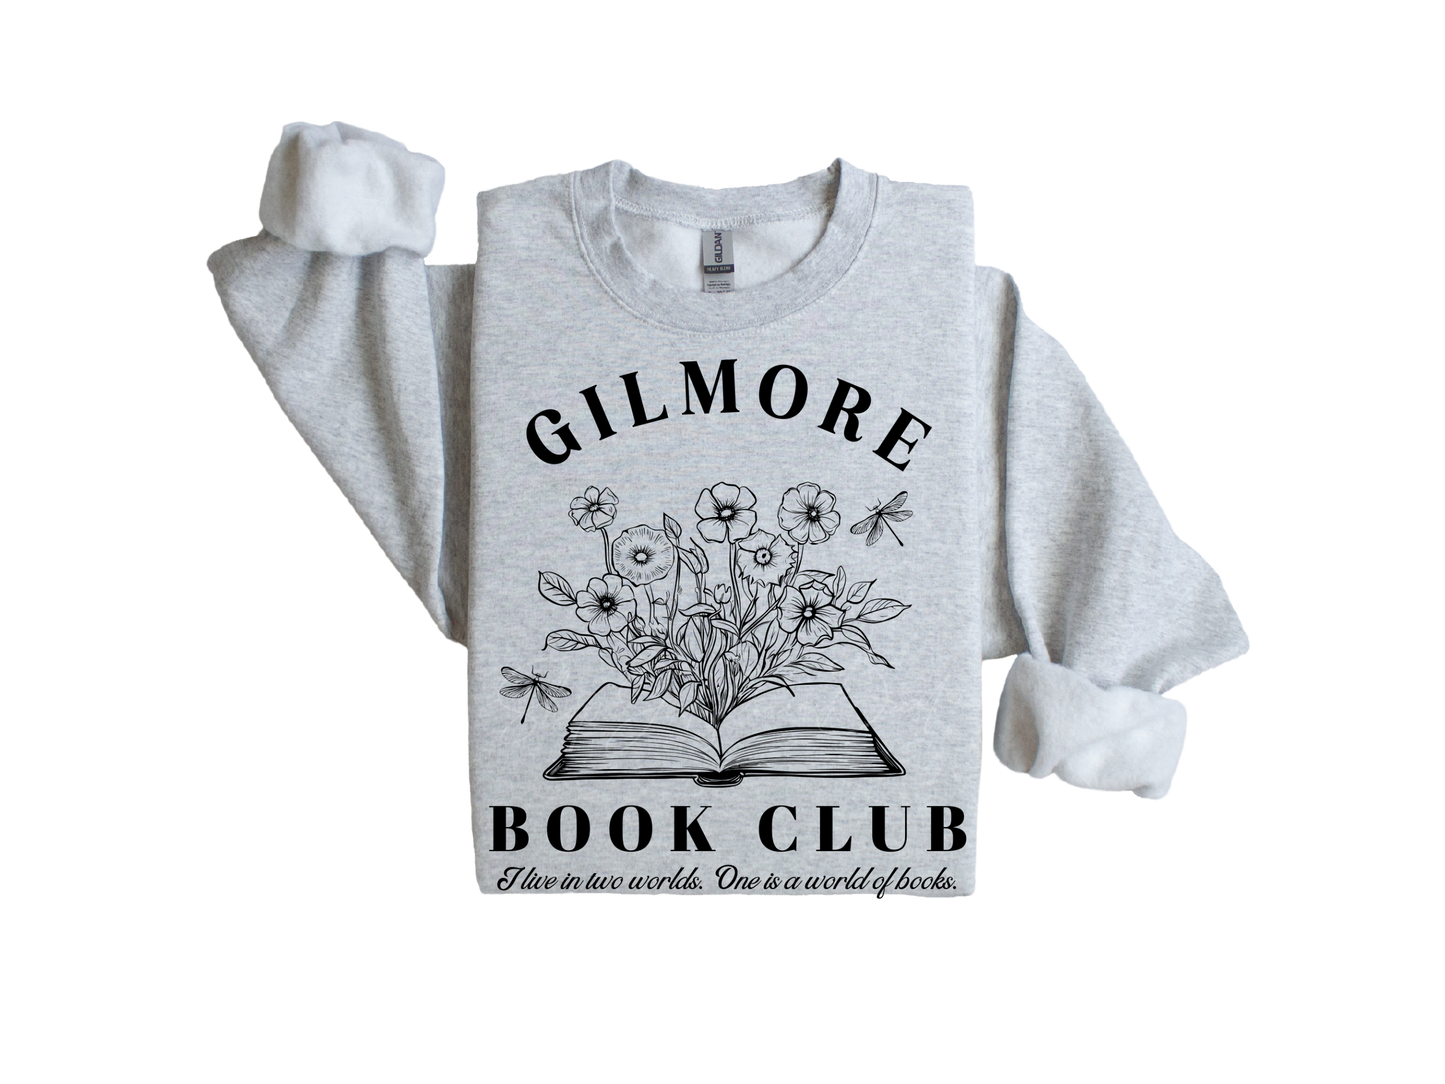 Gilmore Book Club